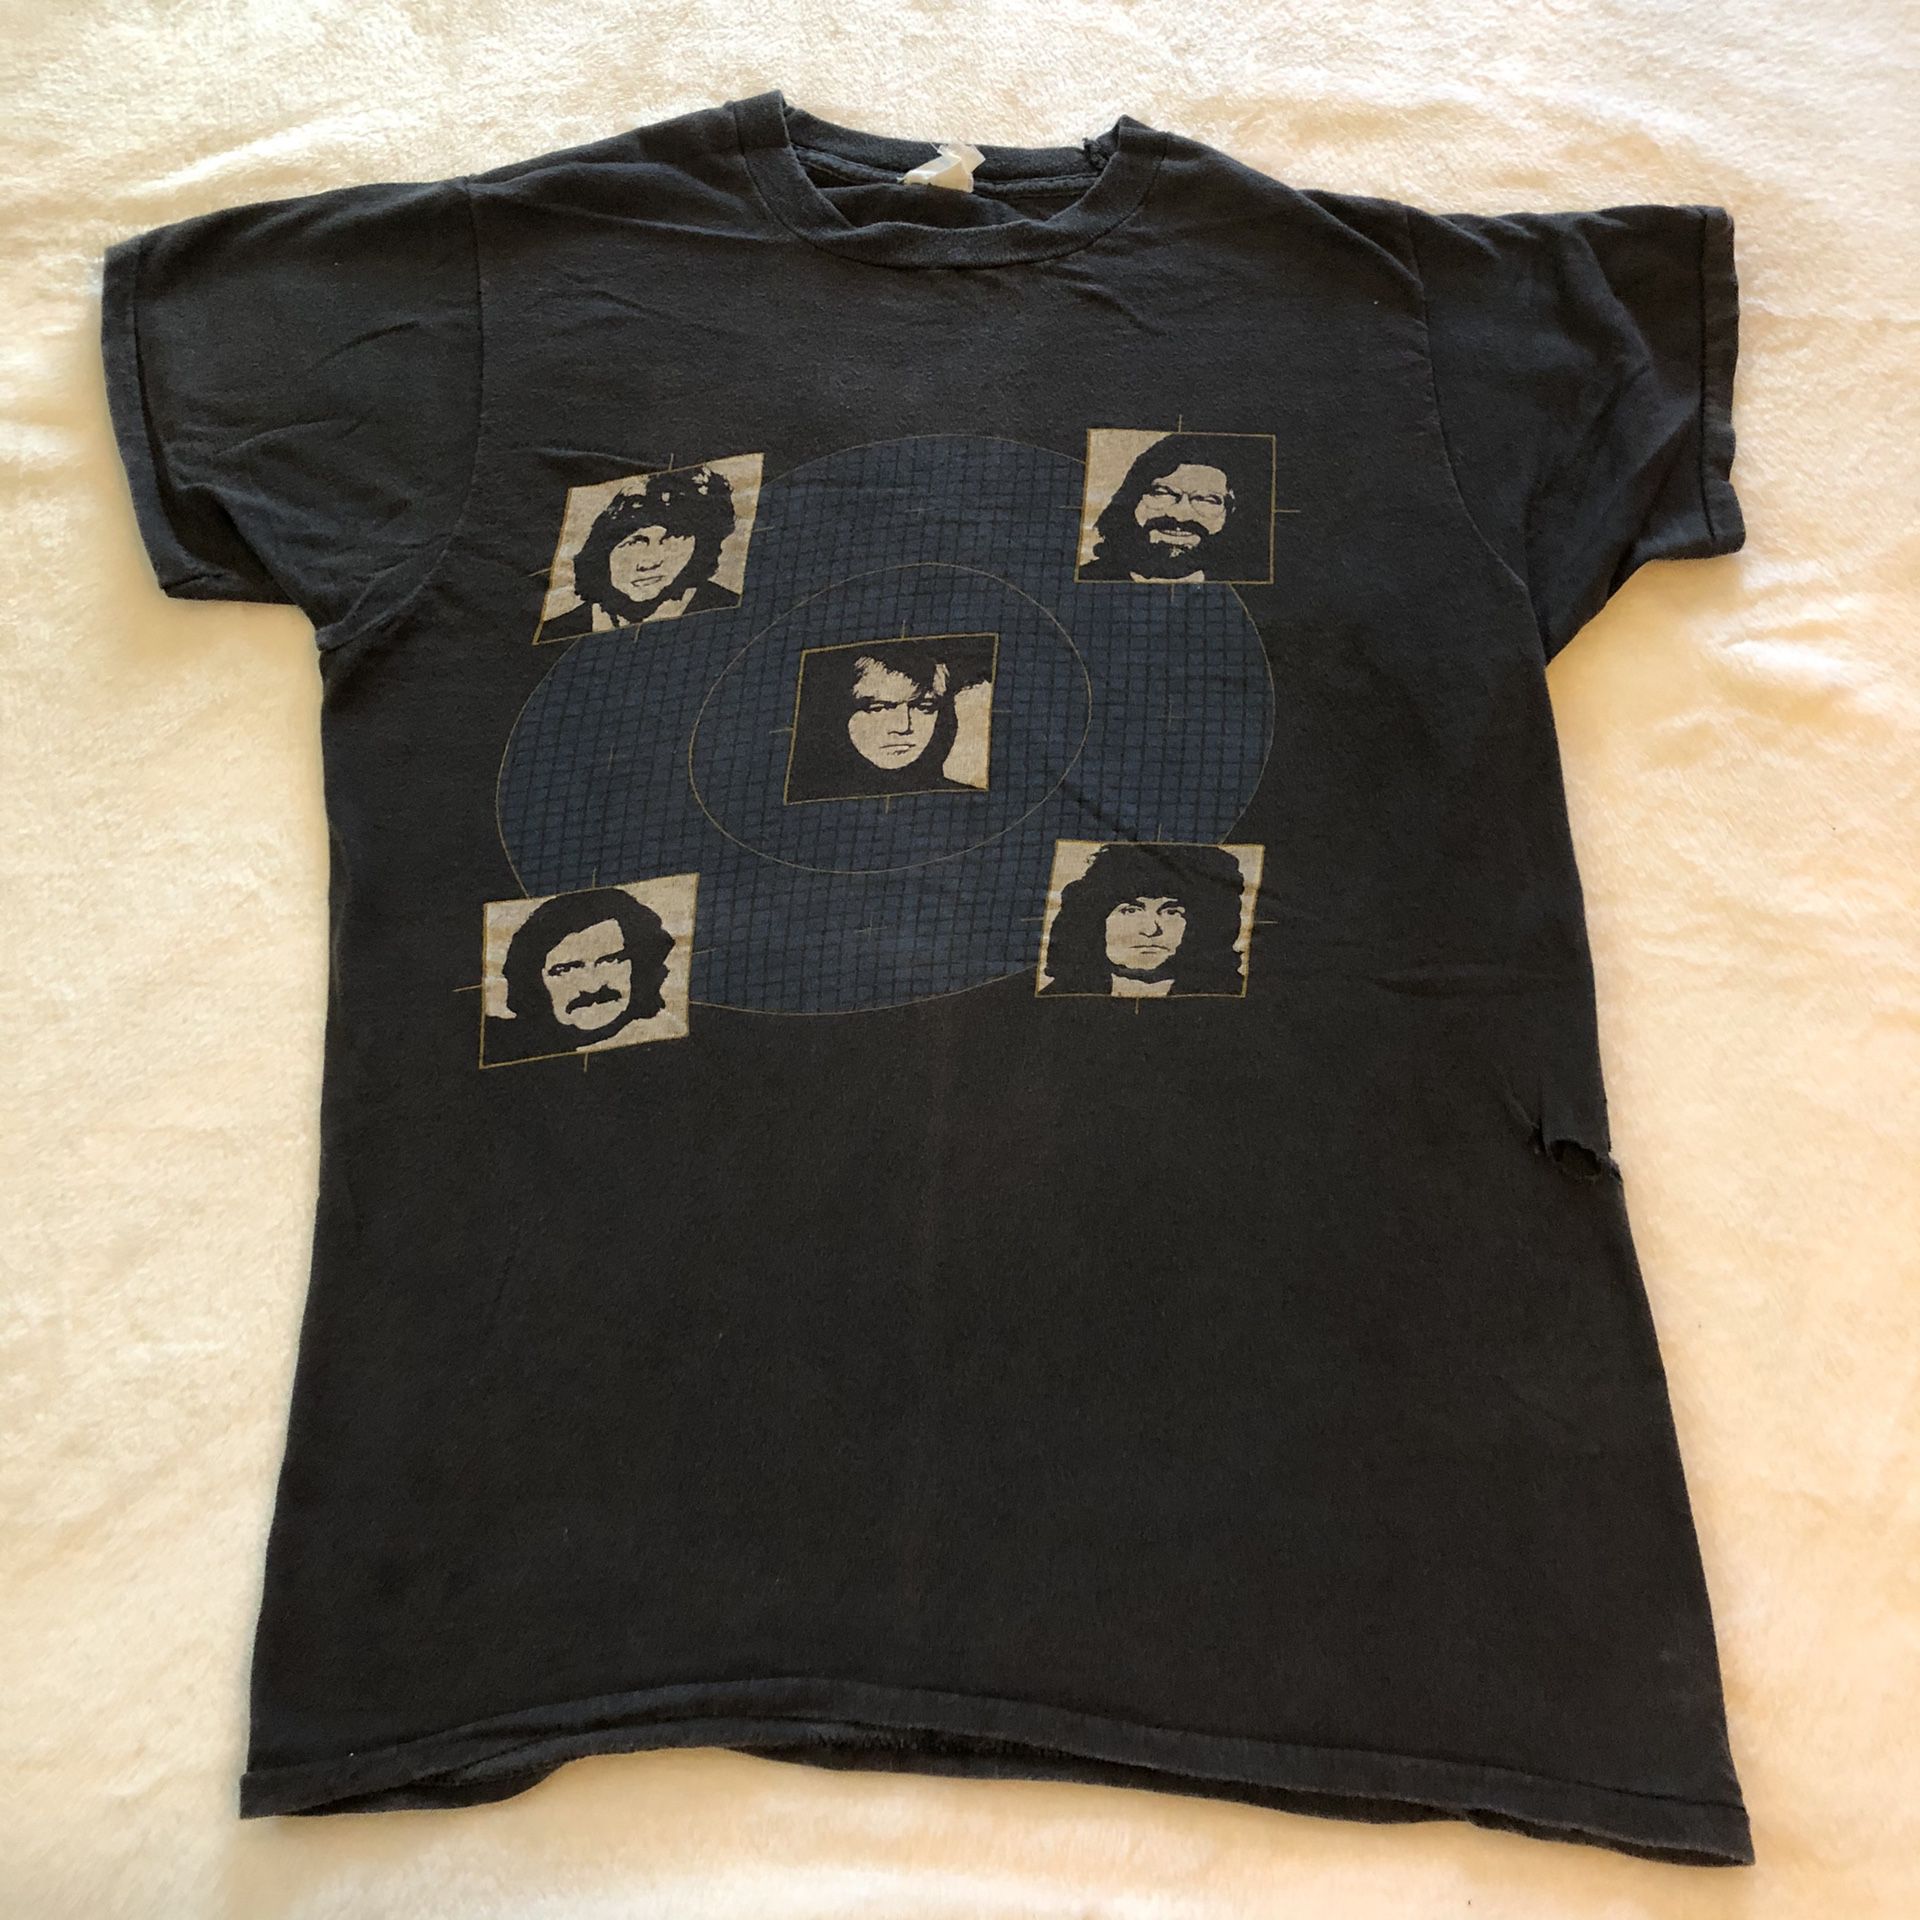 Vintage Moody blues Long distance voyager 1981 tour shirt size medium